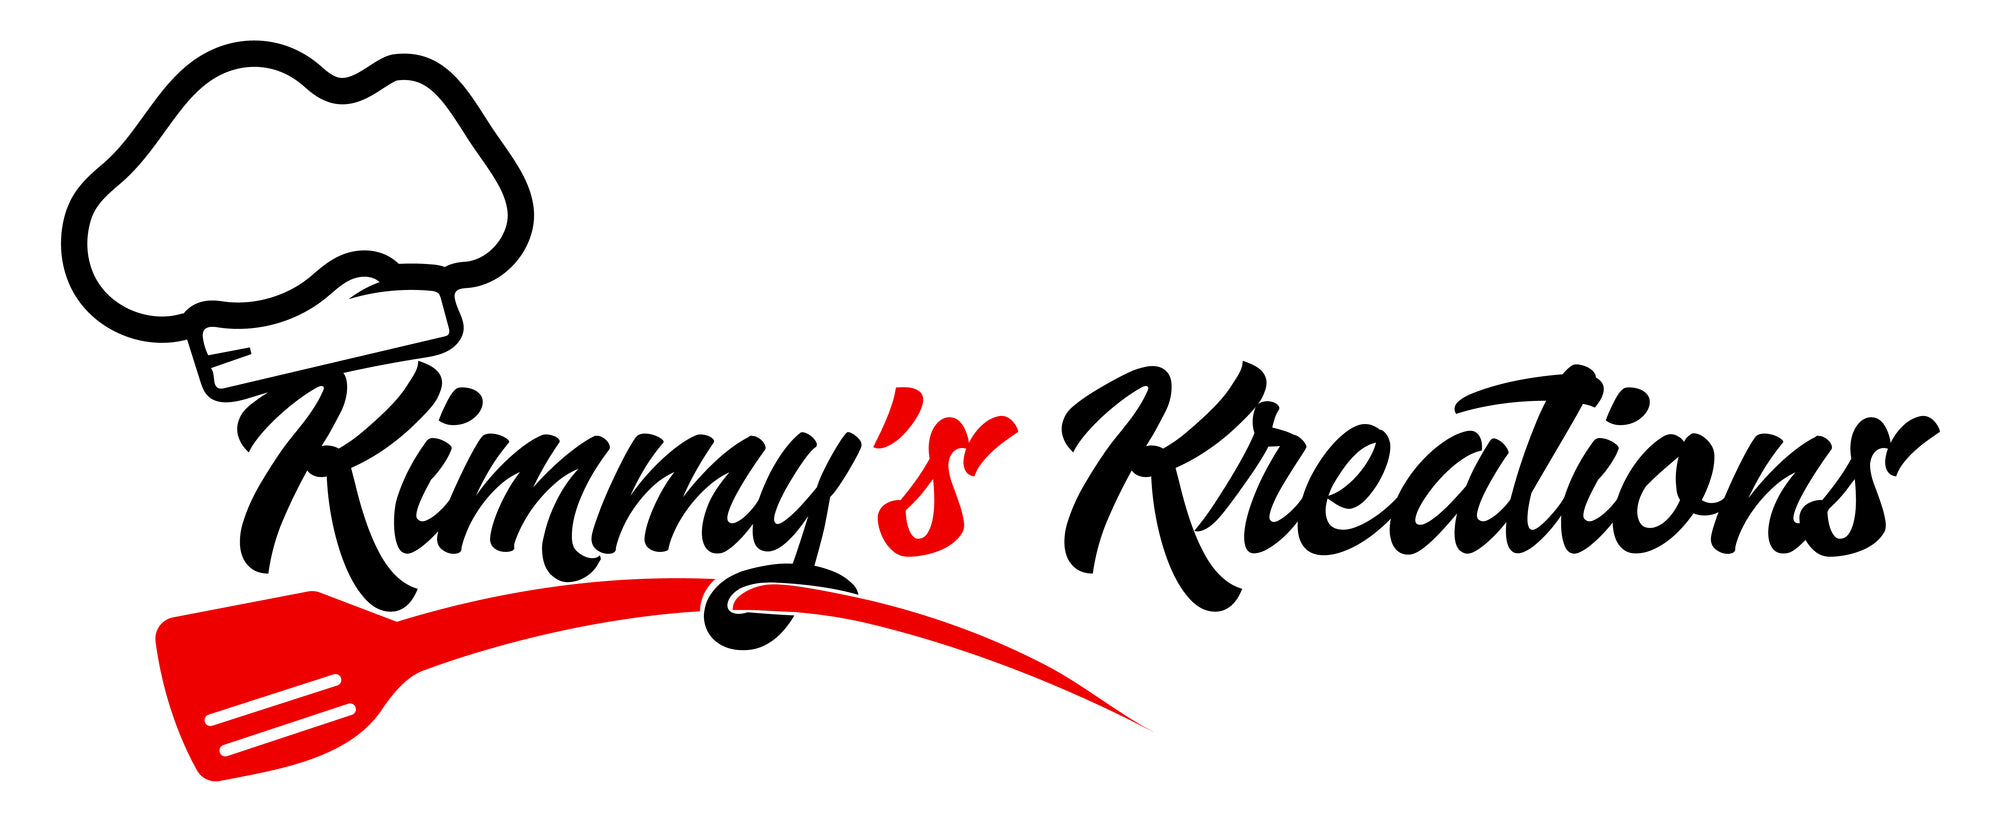 Seasoning - Kimmy's Kreations